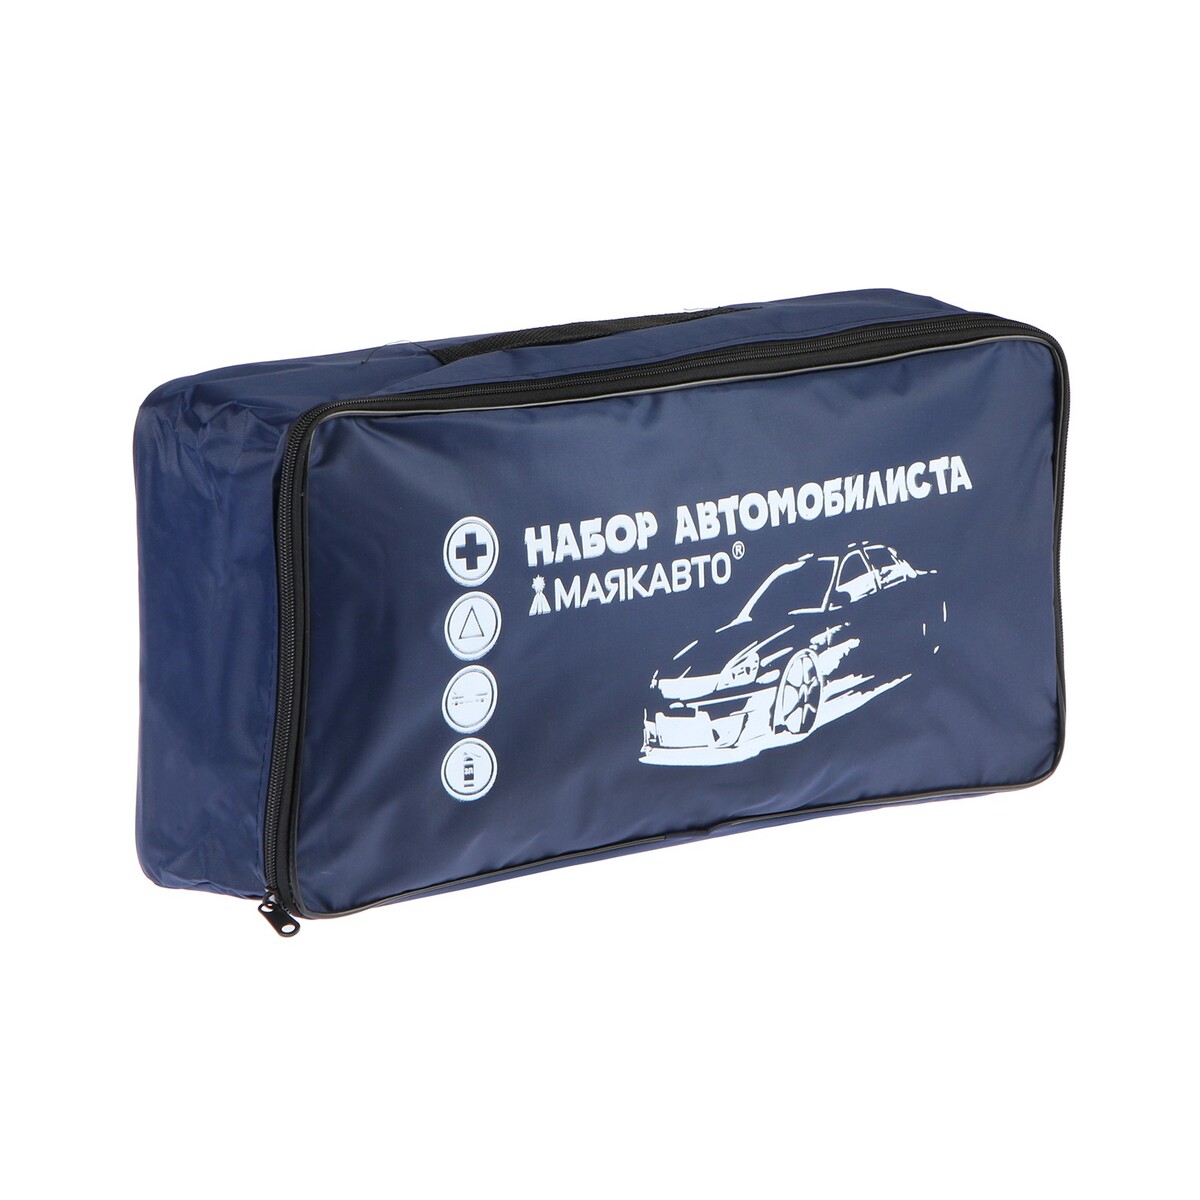 Автомобильная сумка для то, 46х22х12 см, синяя No brand, цвет синий 05587178 - фото 1